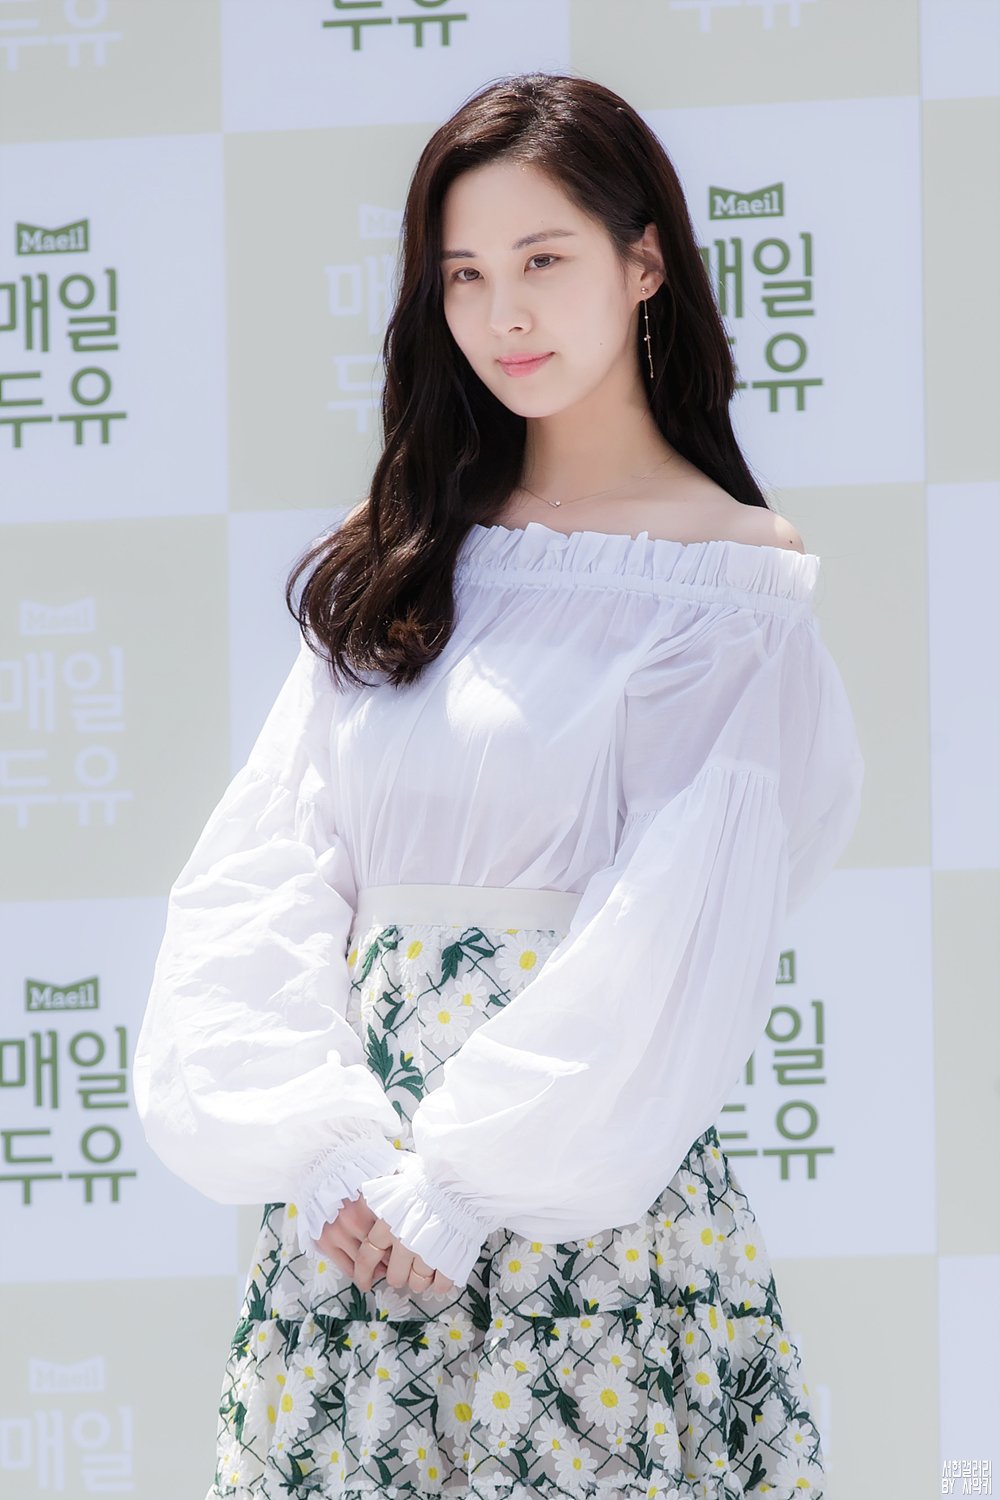  [PIC][03-06-2017]SeoHyun tham dự sự kiện “City Forestival - Maeil Duyou 'Confidence Diary'” vào chiều nay - Page 4 24lpmneifc-3000x3000